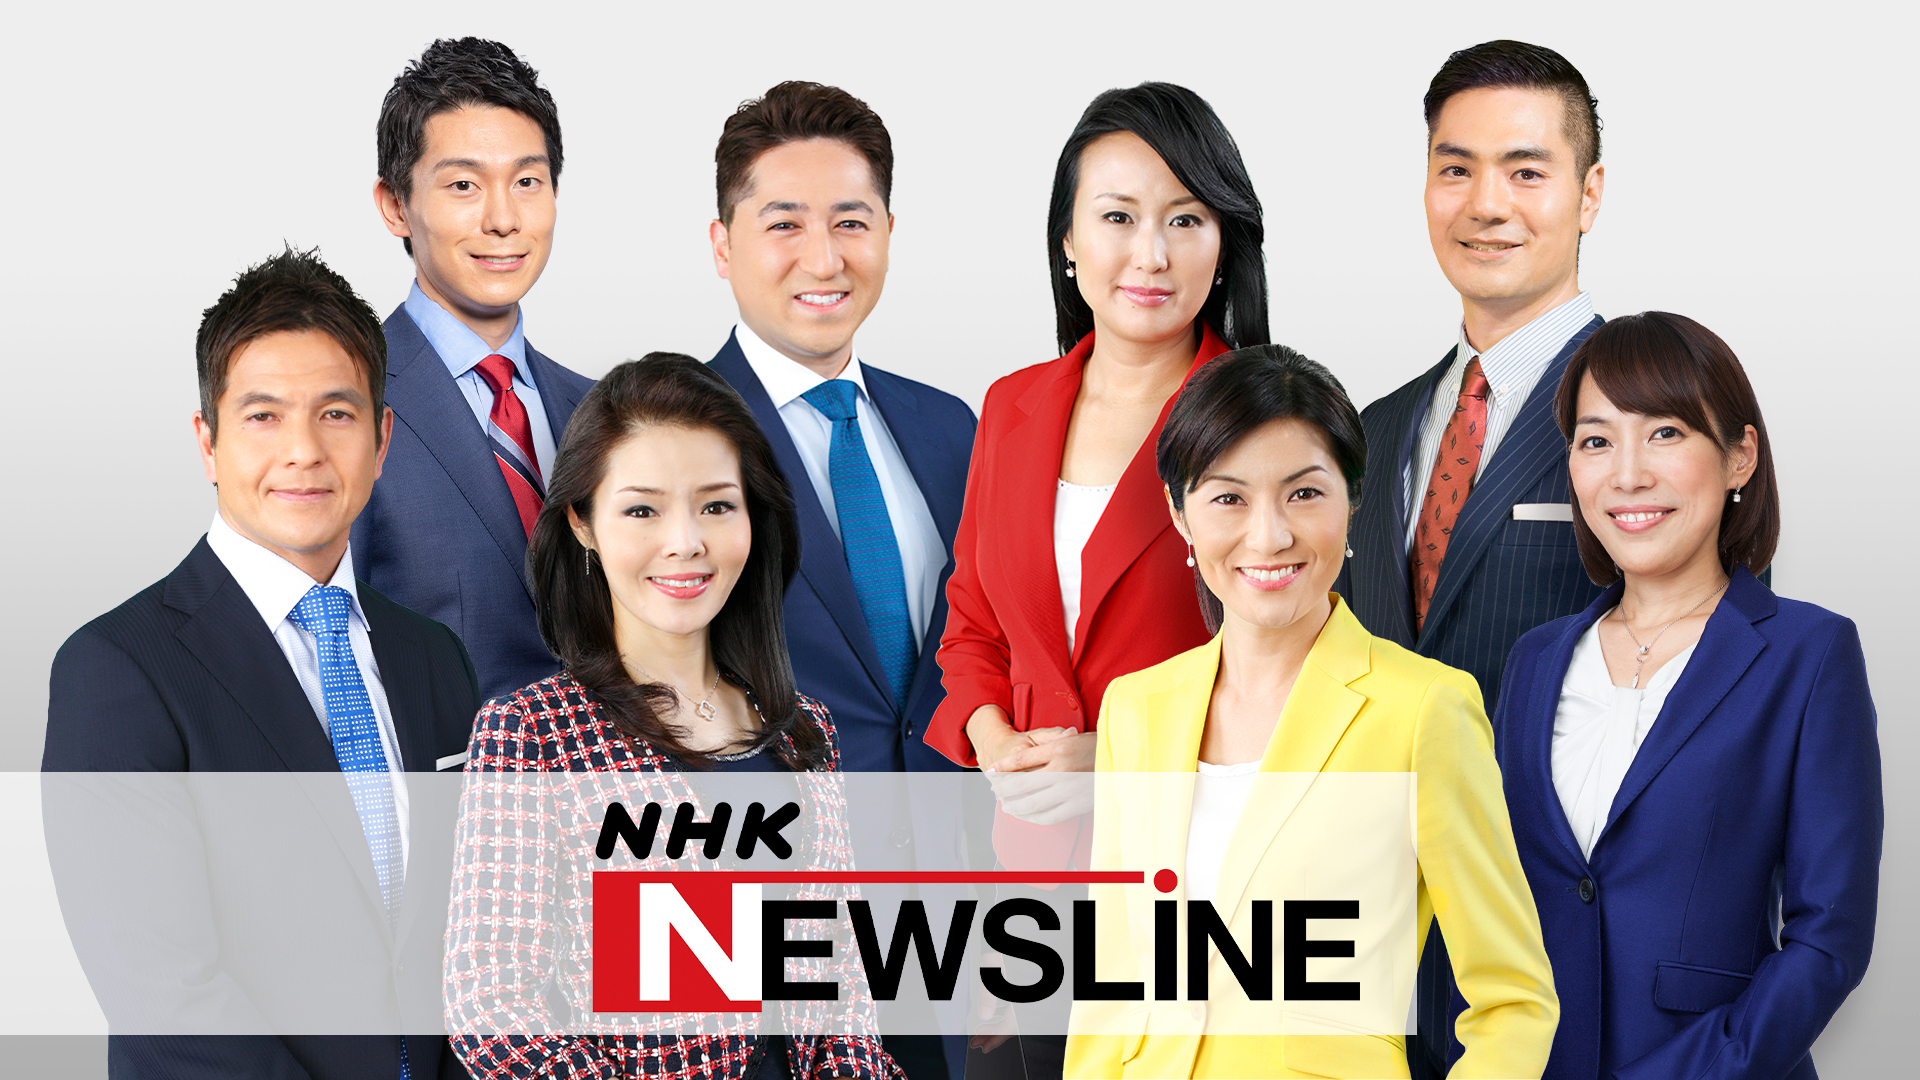 NHK Newsline graphic